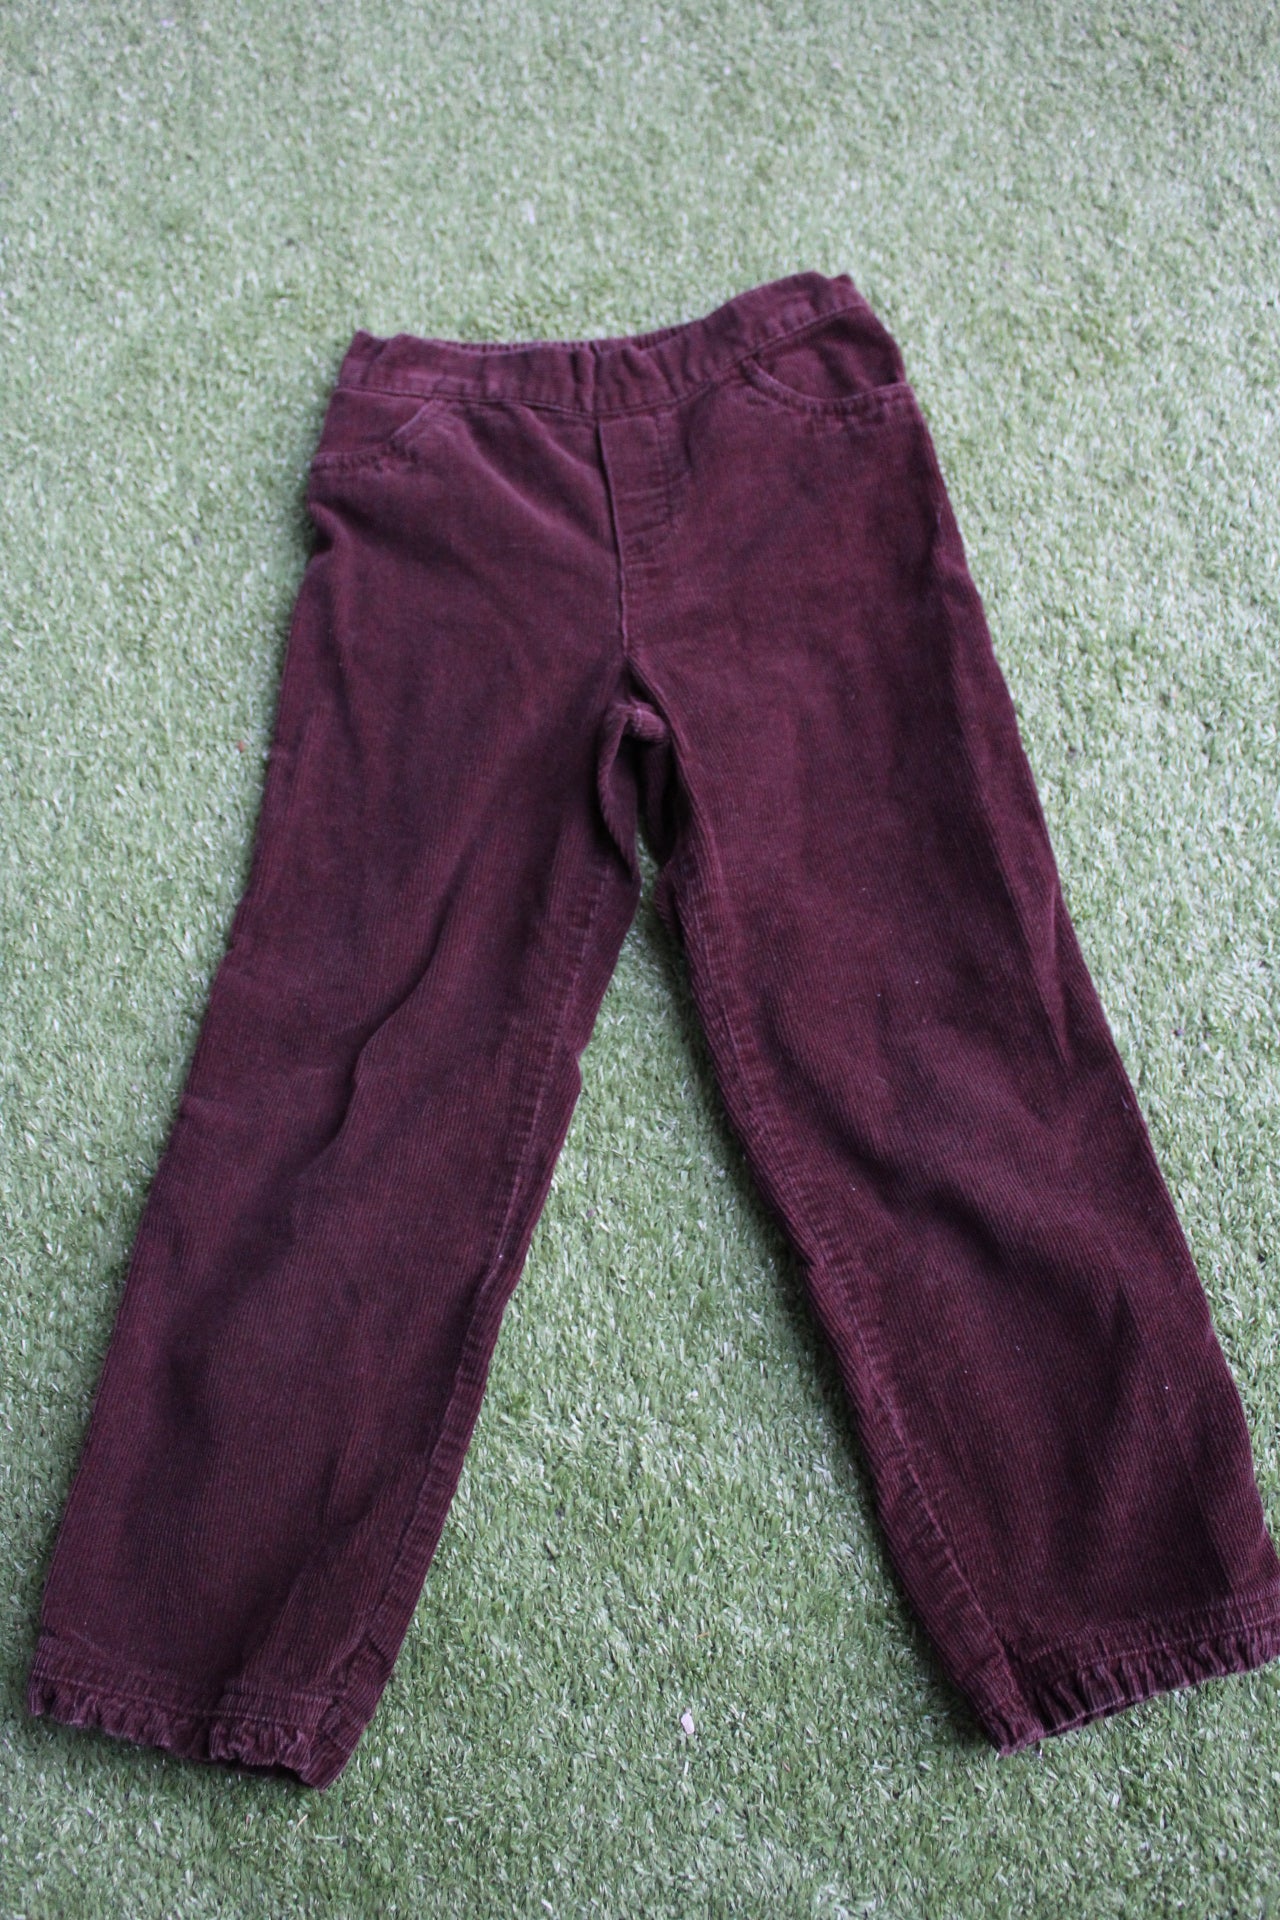 Corduroy pants (5T)